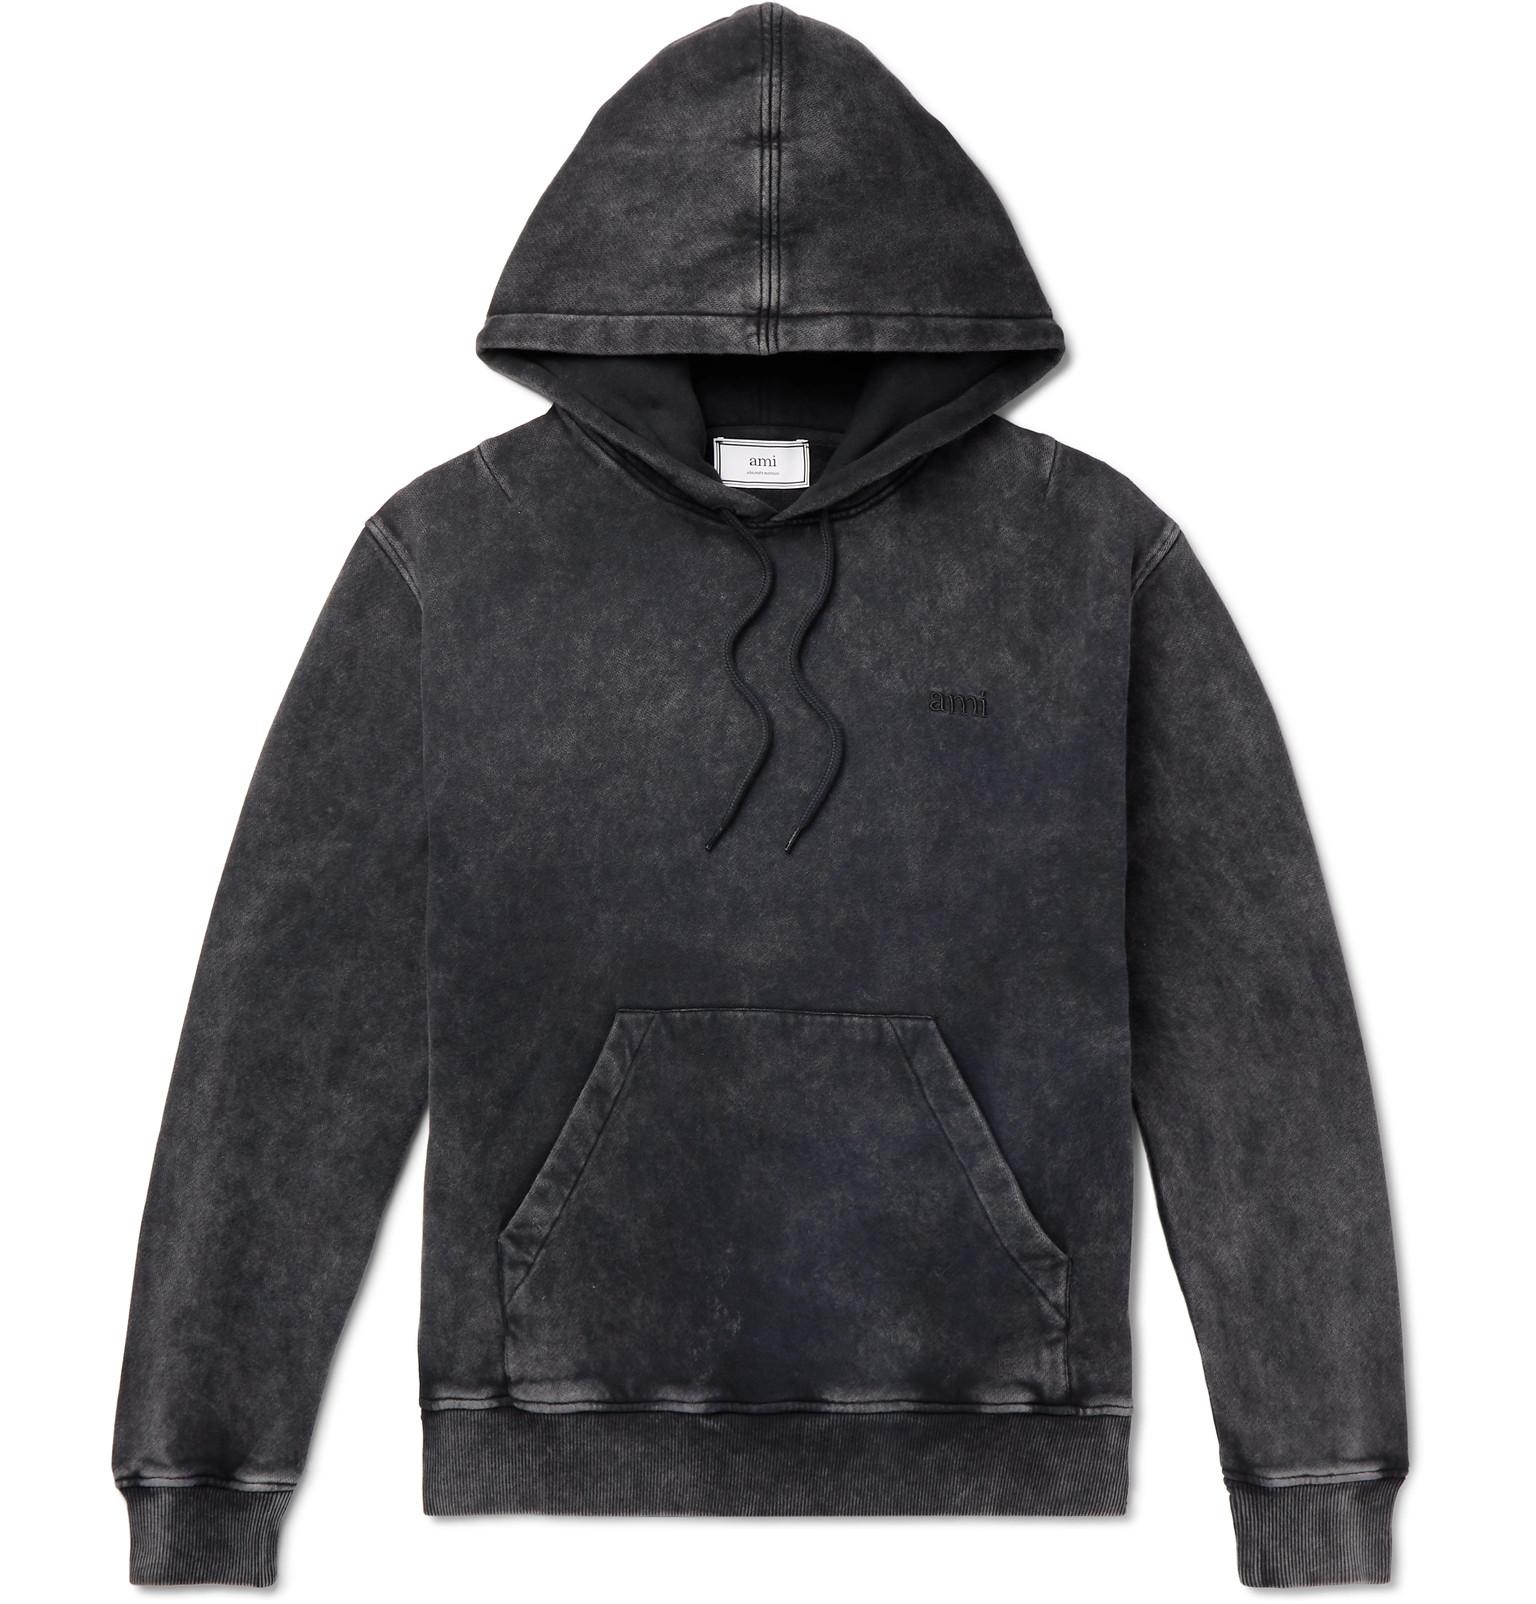 AMI Acid-wash Fleeceback Cotton-jersey Hoodie in Black for Men - Lyst